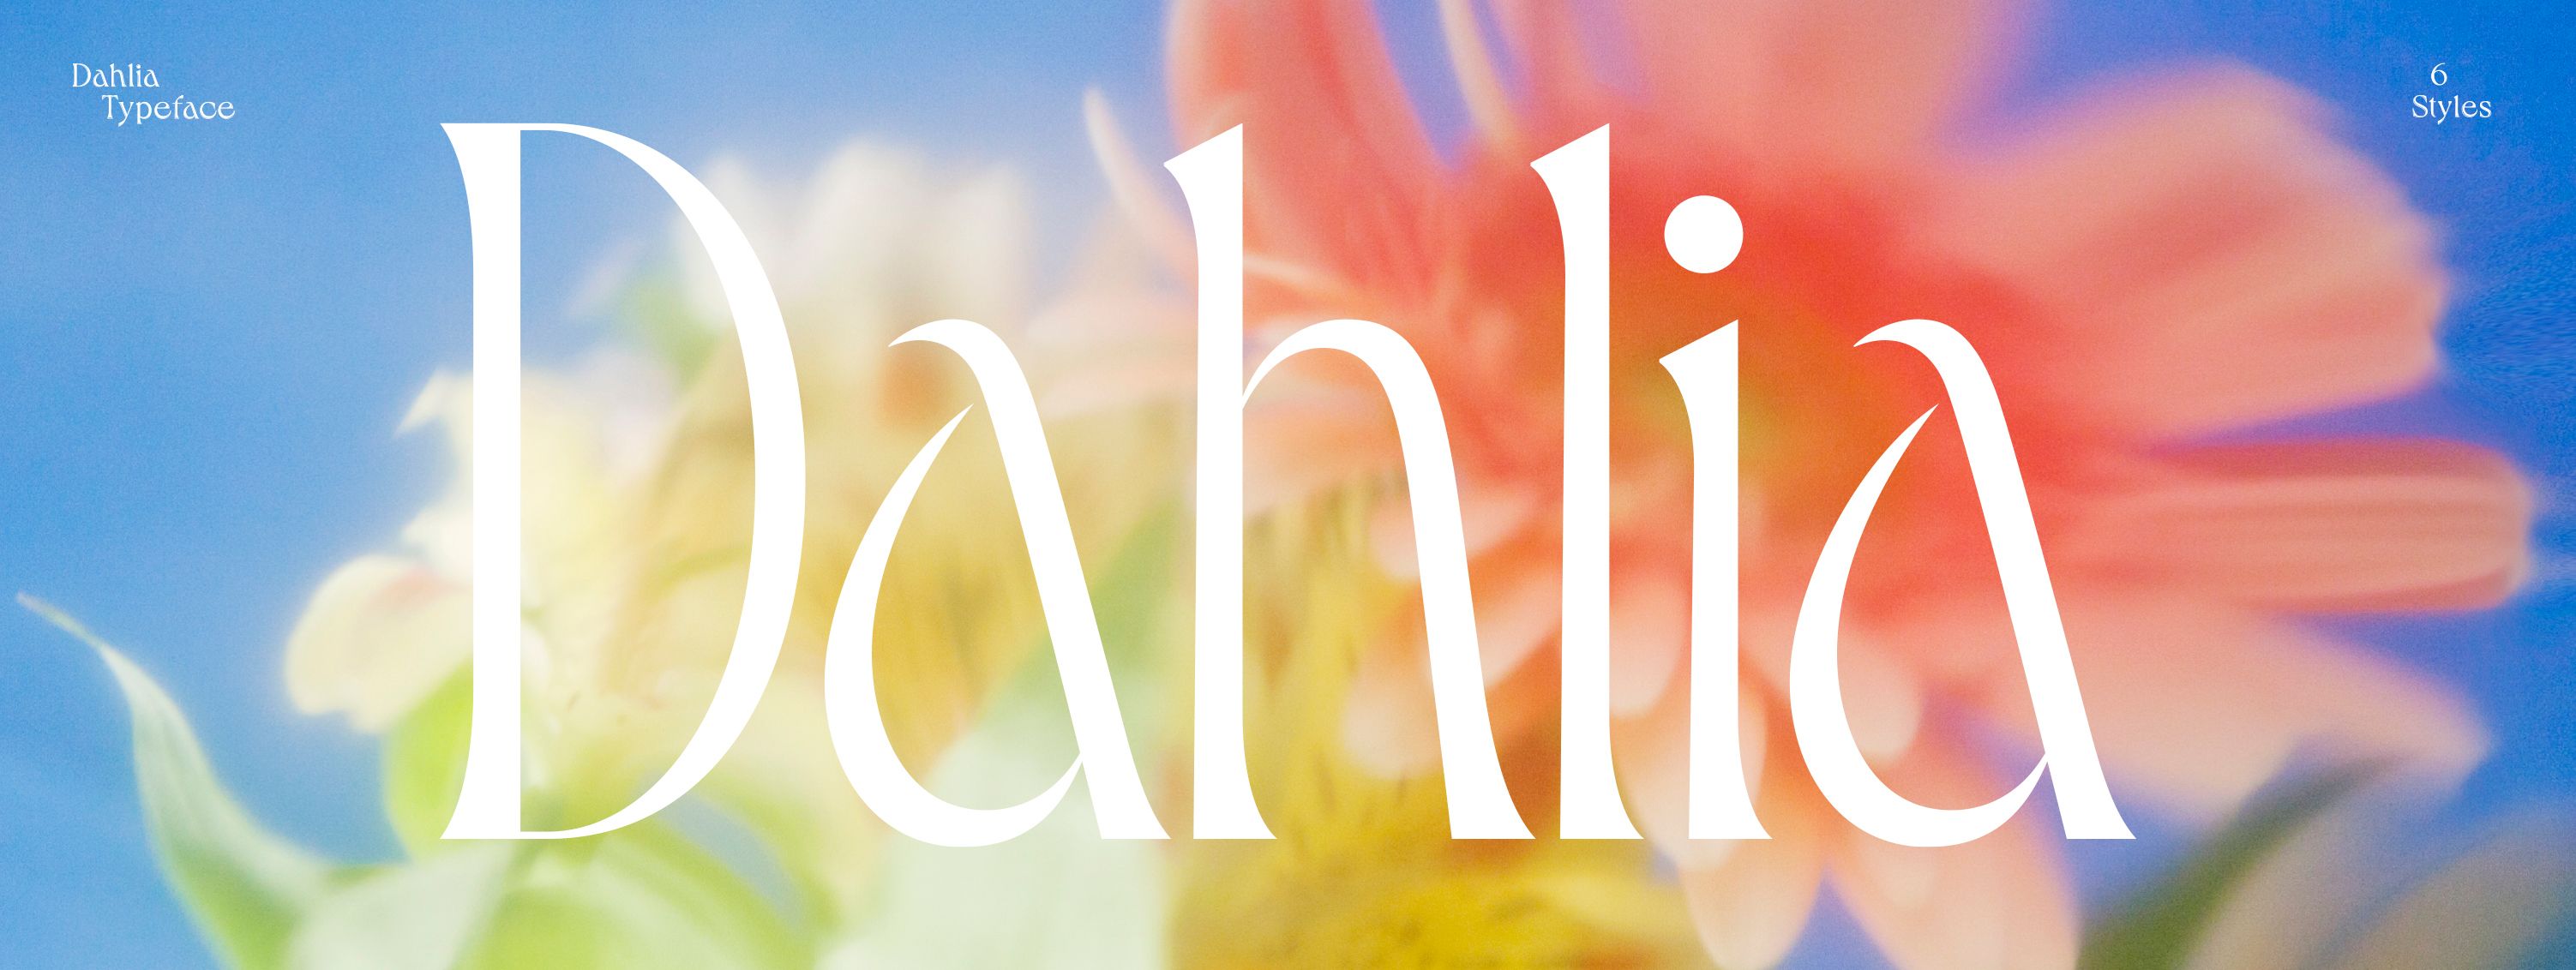 Dahlia Typeface